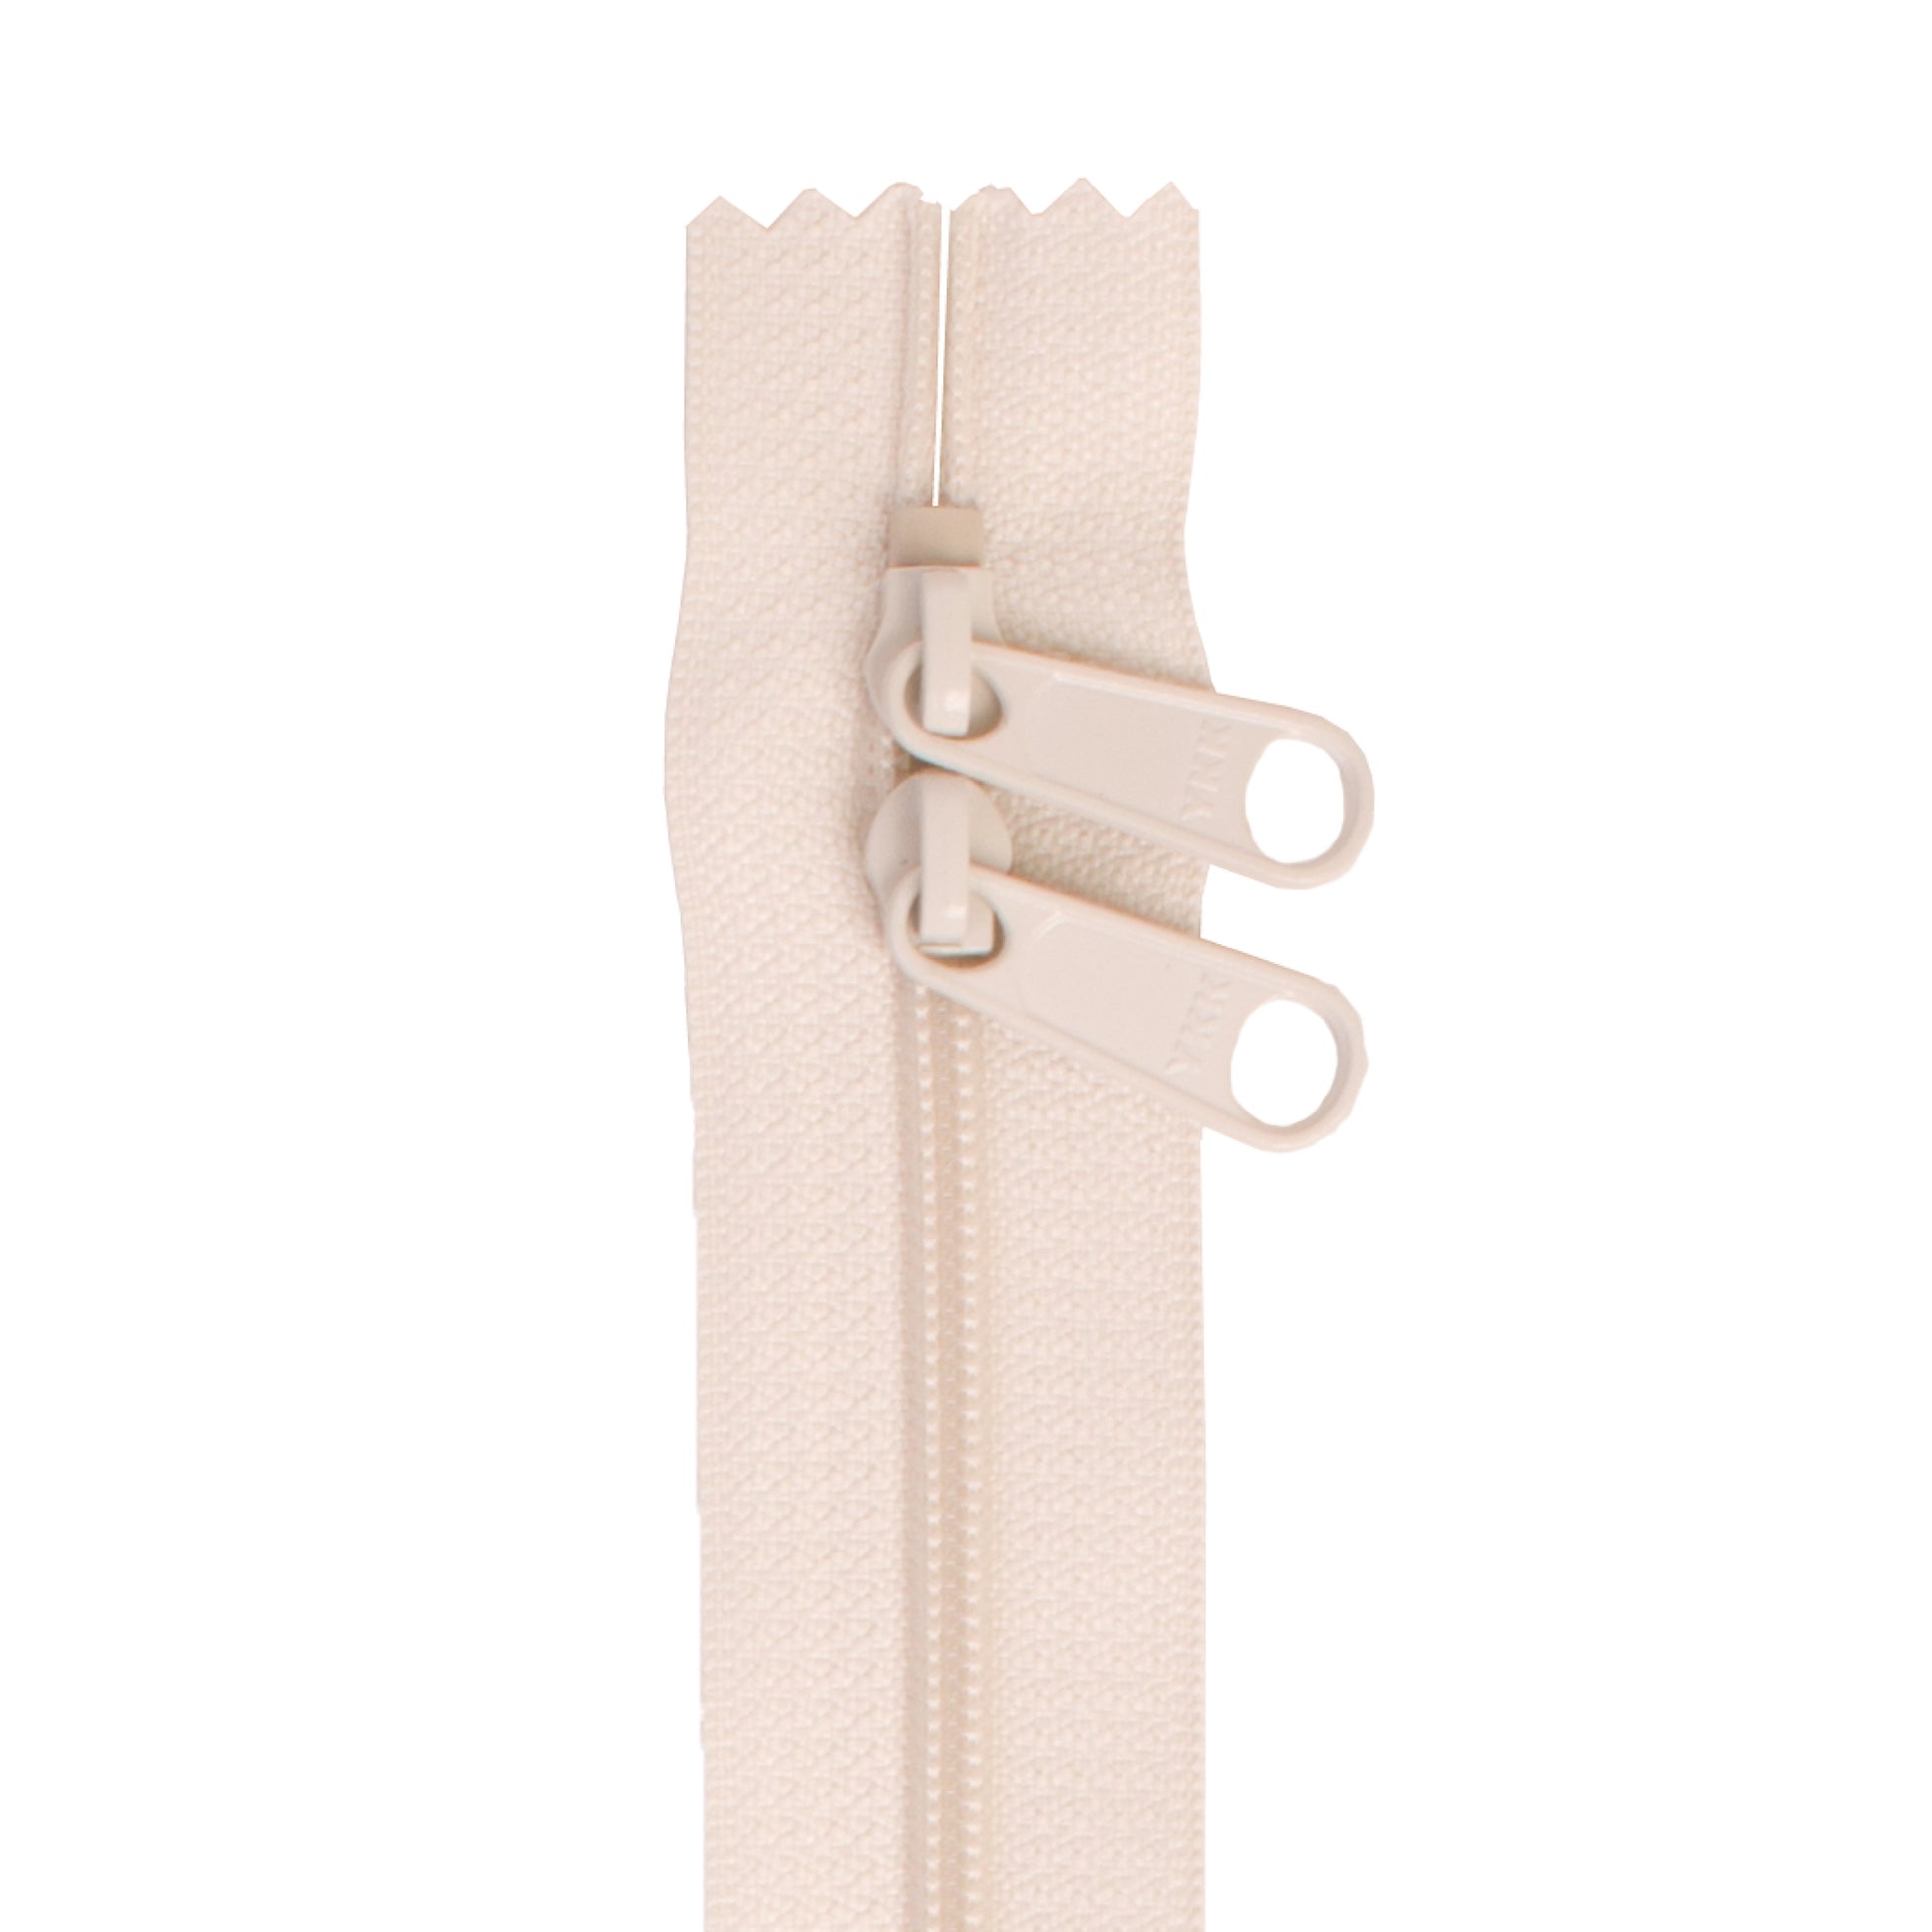 Handbag Zipper - Double Slide - 30in - Ivory